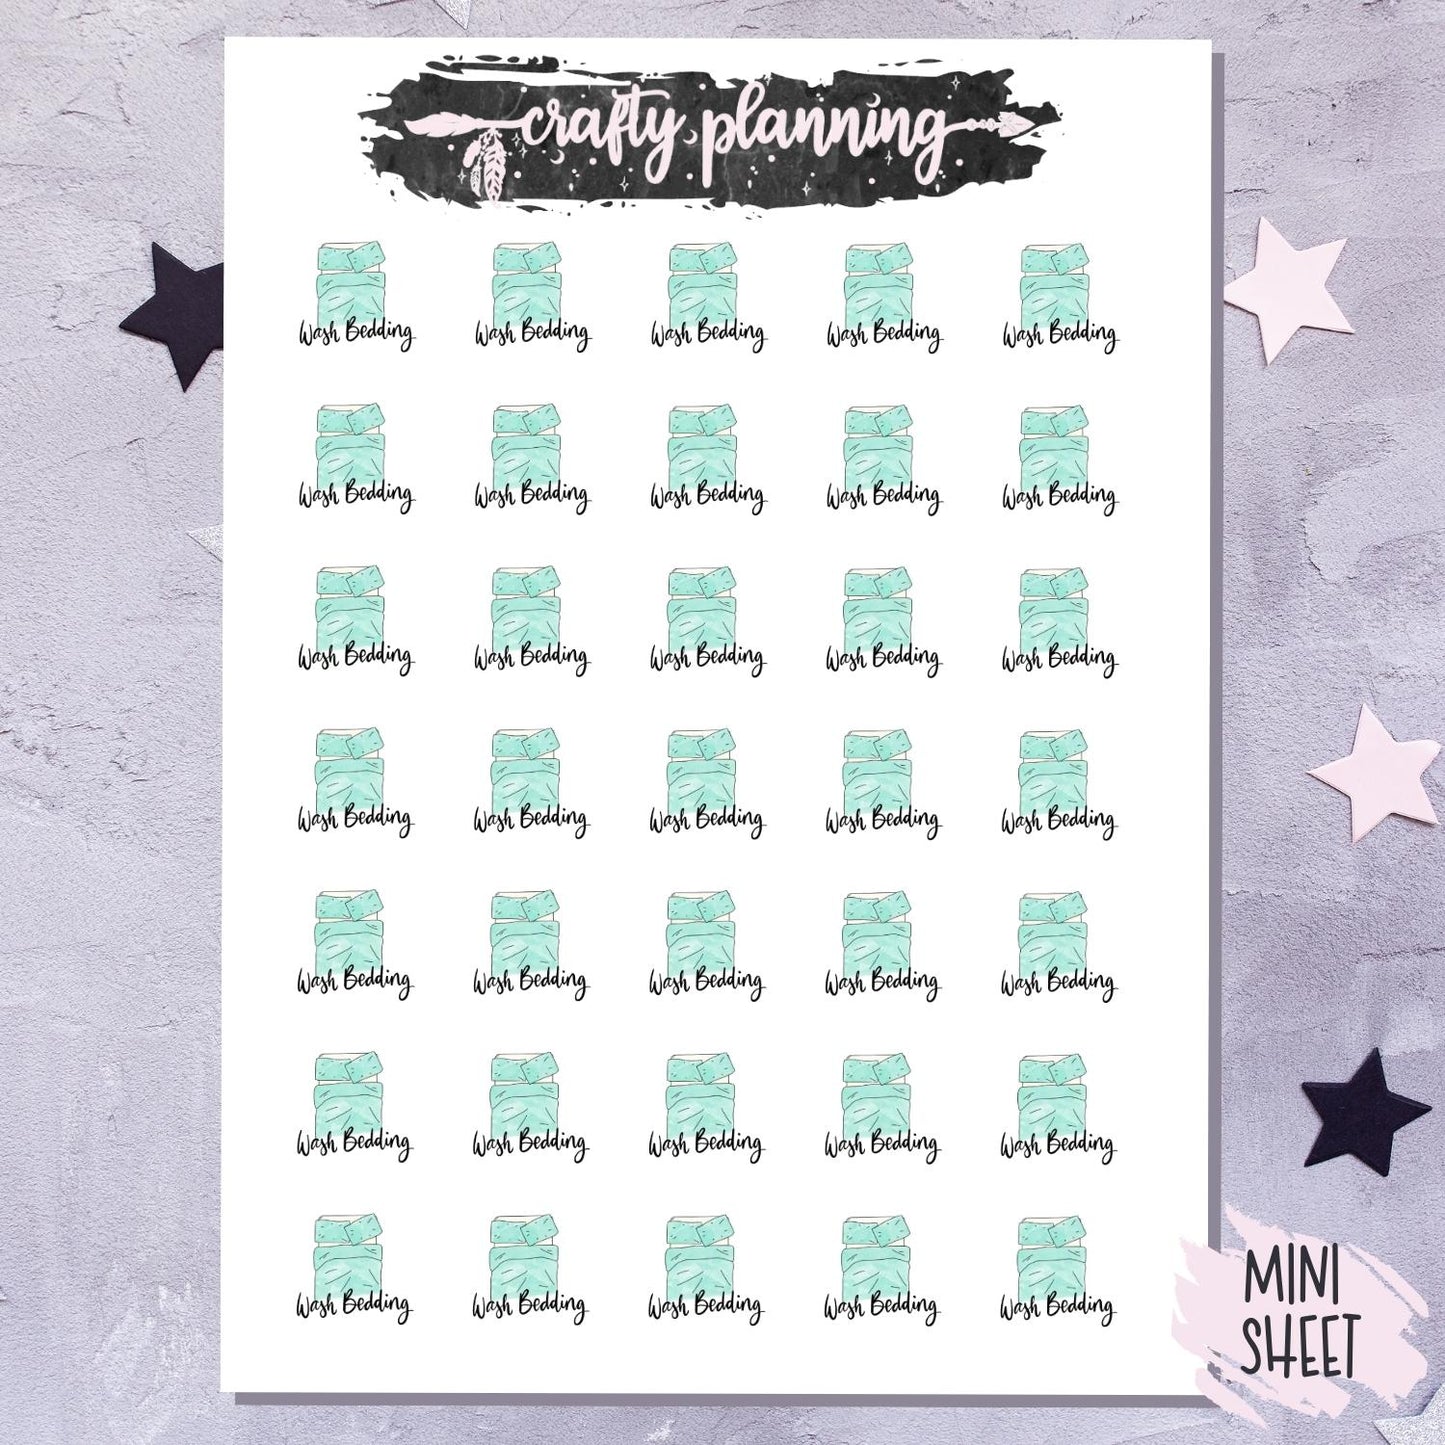 Wash Bedding - Hand Drawn - Mini Sticker Sheet